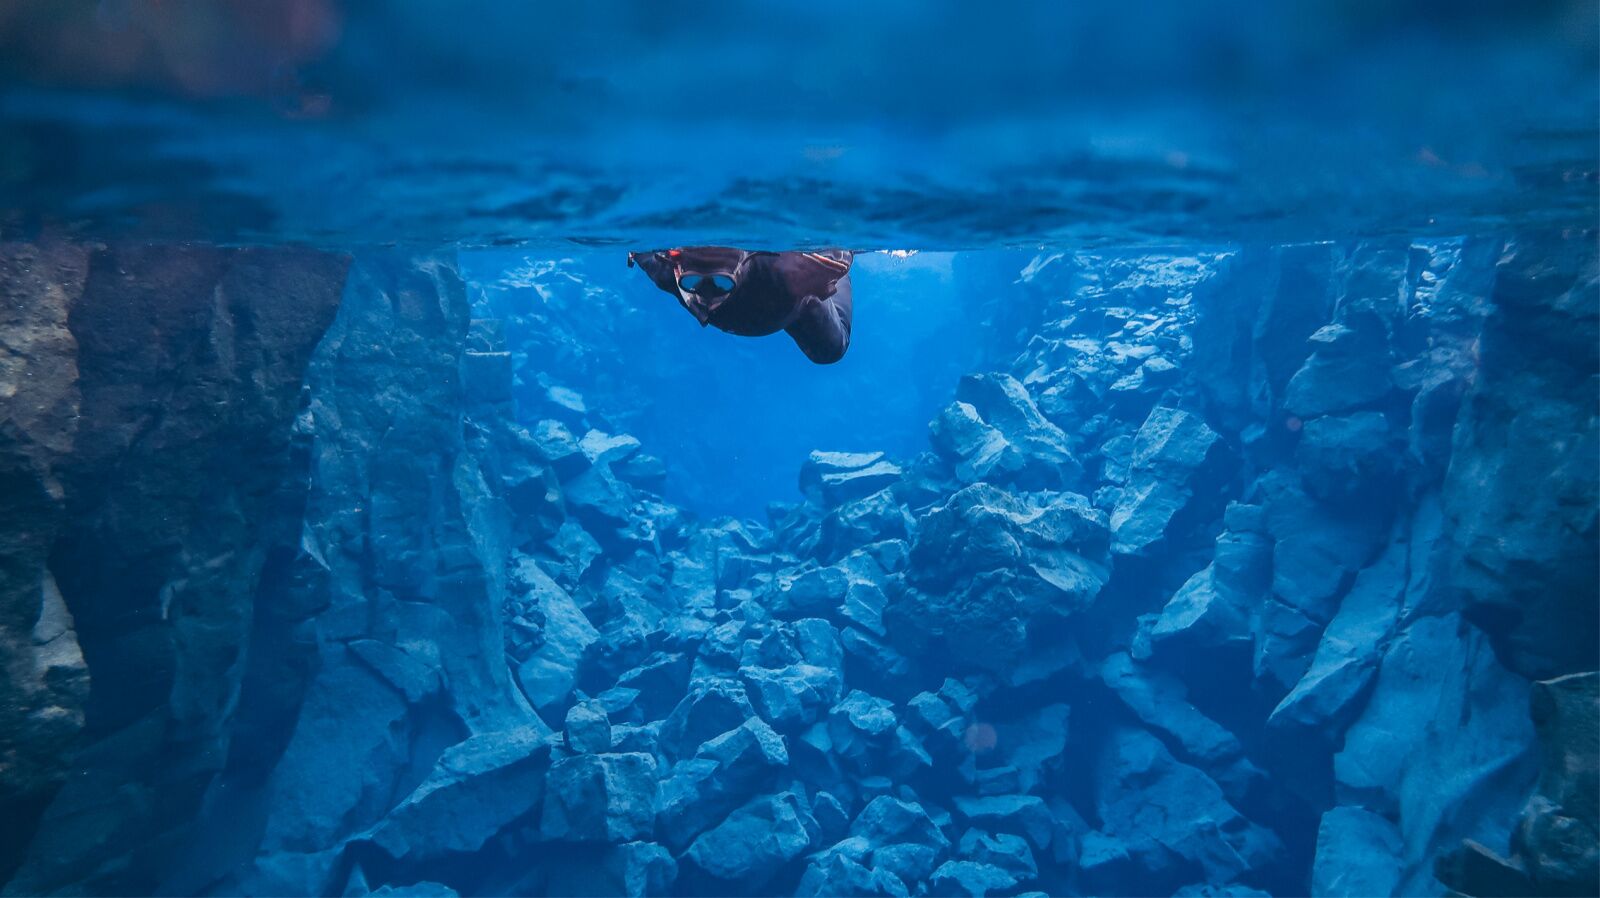 silfra diving - snorkeler above the fissure